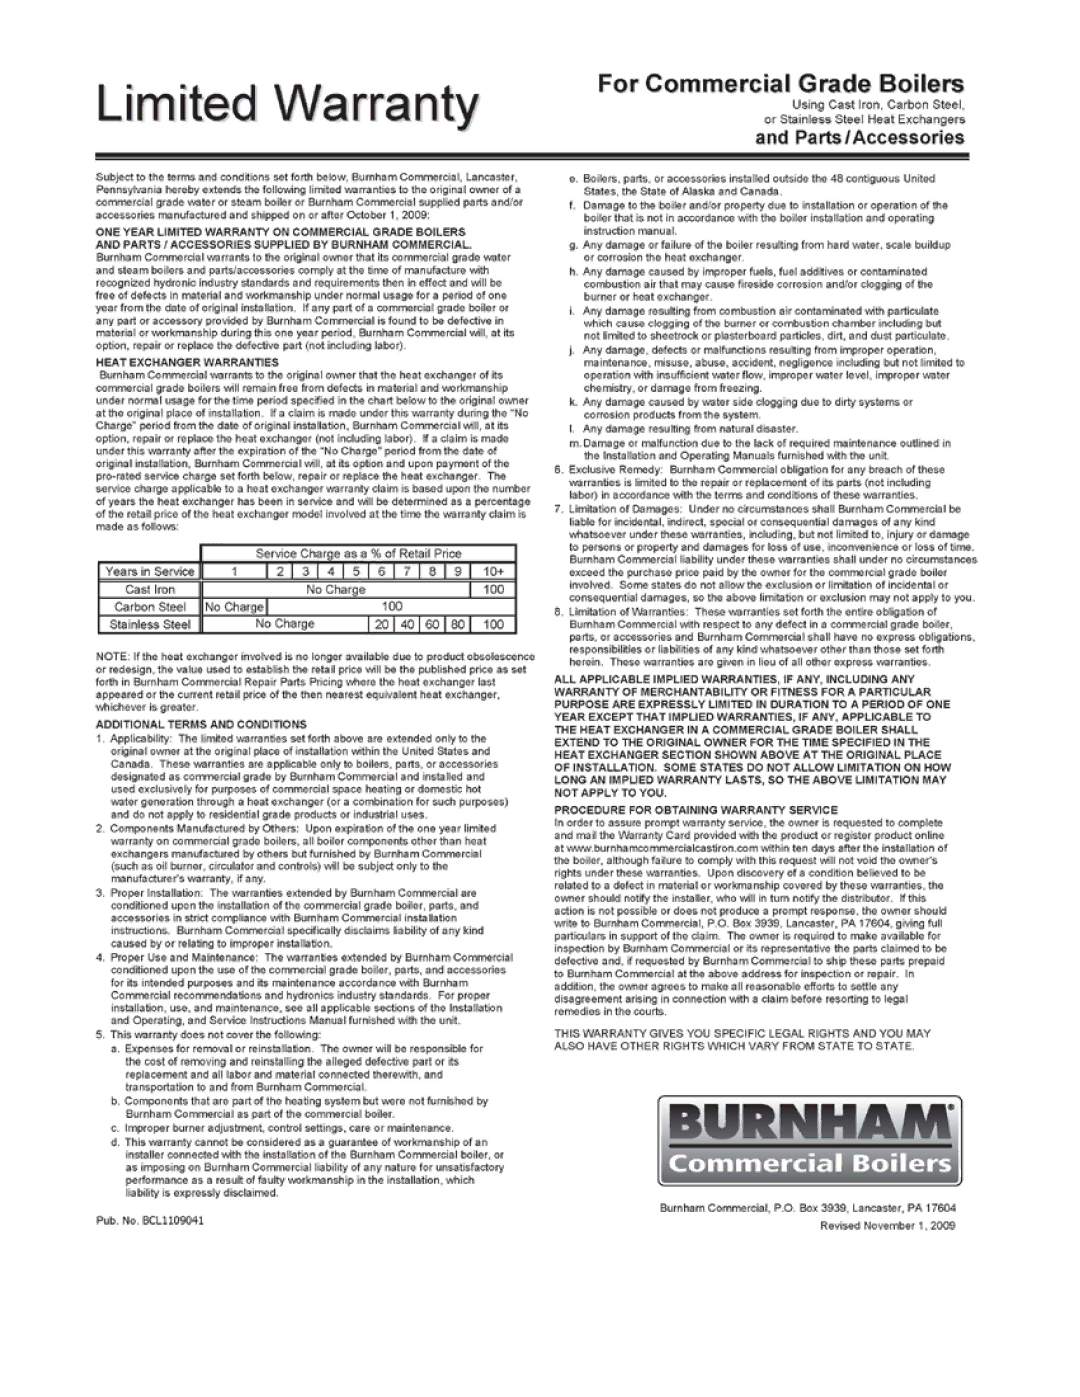 Burnham V9A manual 